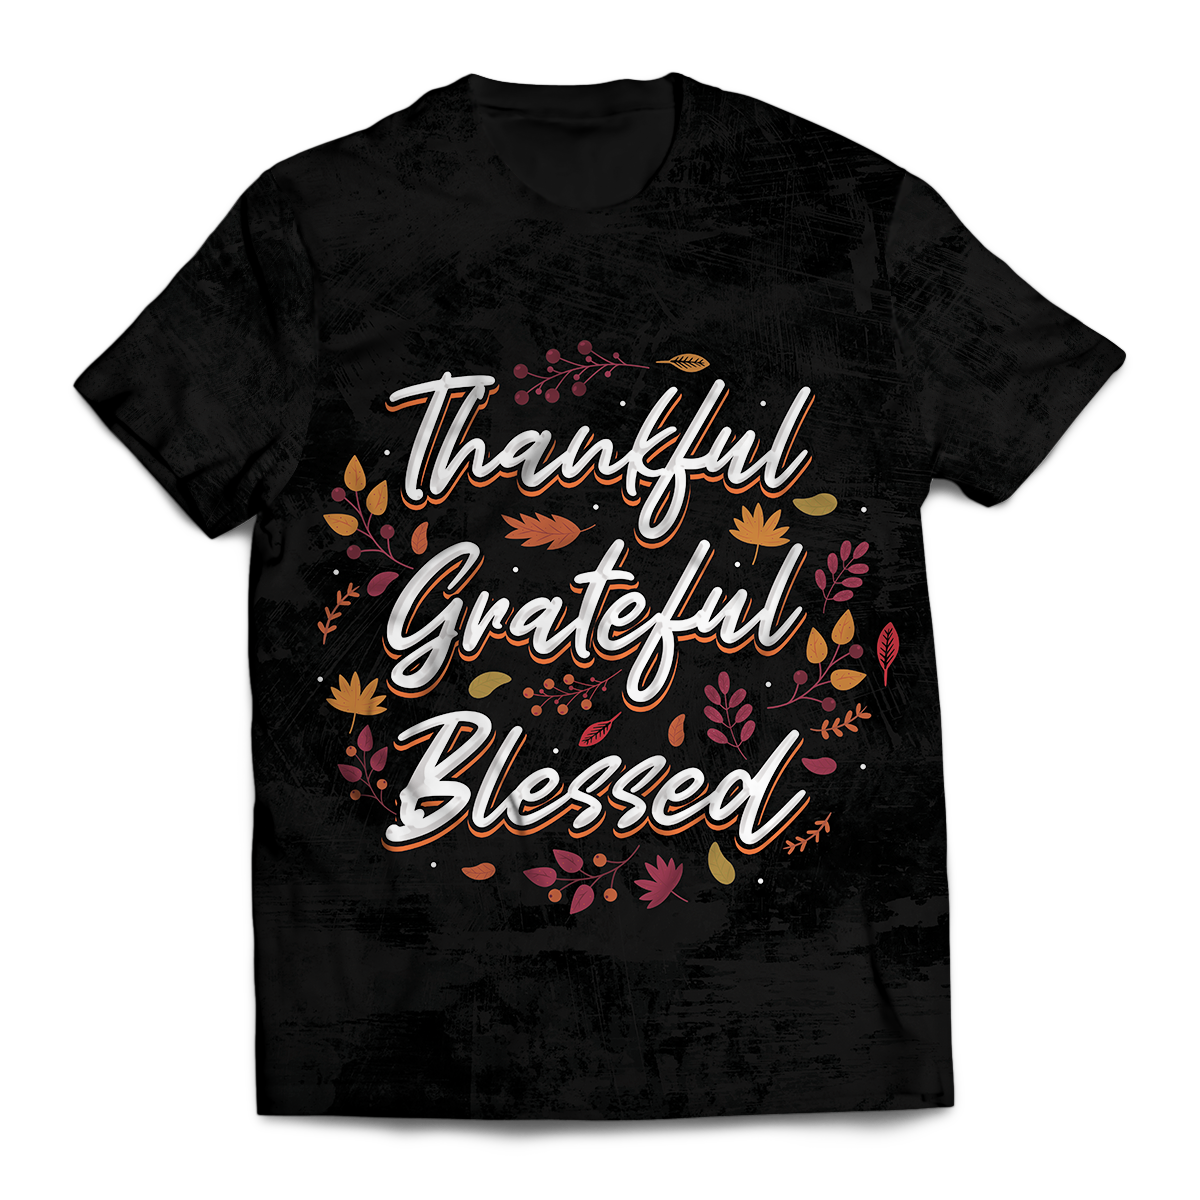 Thankful Grateful Blessed Unisex T-Shirt